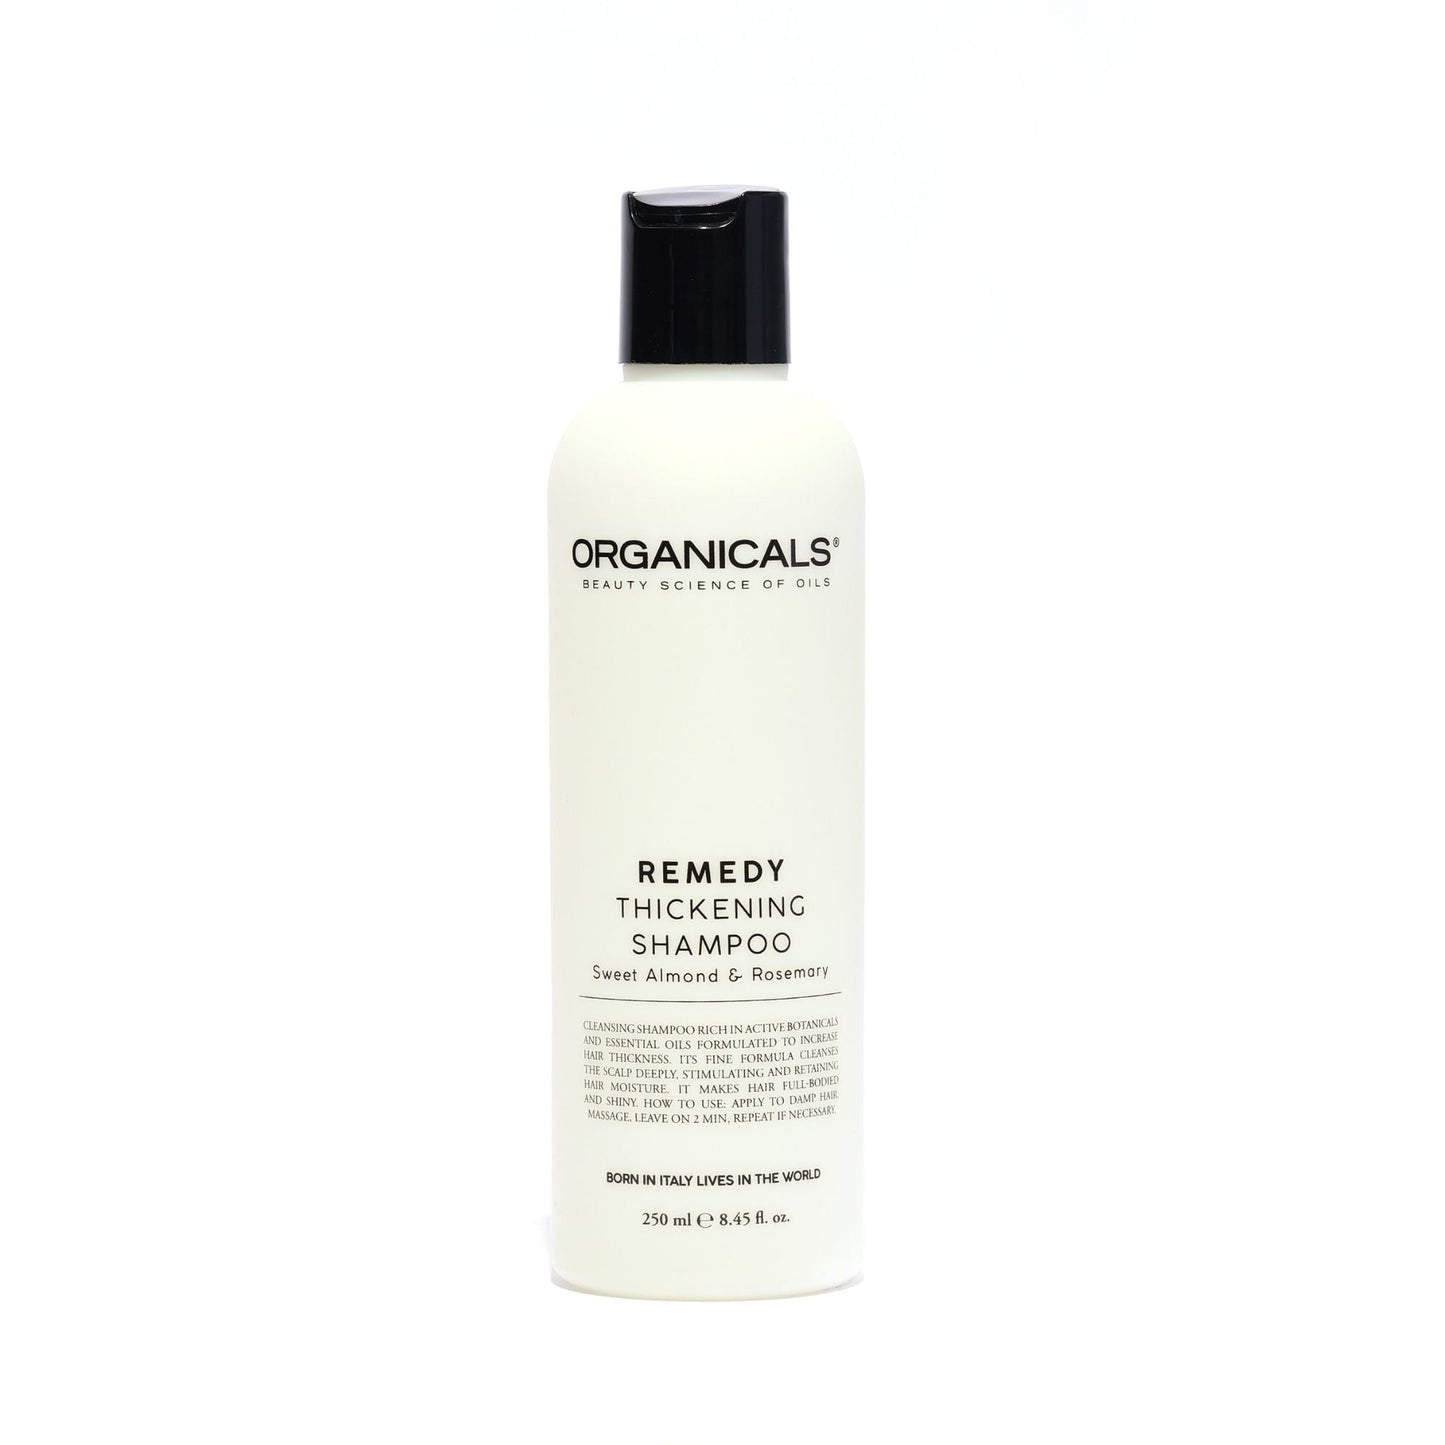 REMEDY Thickening šampon za zgostitev las ORGANICALS - Šamponi.si